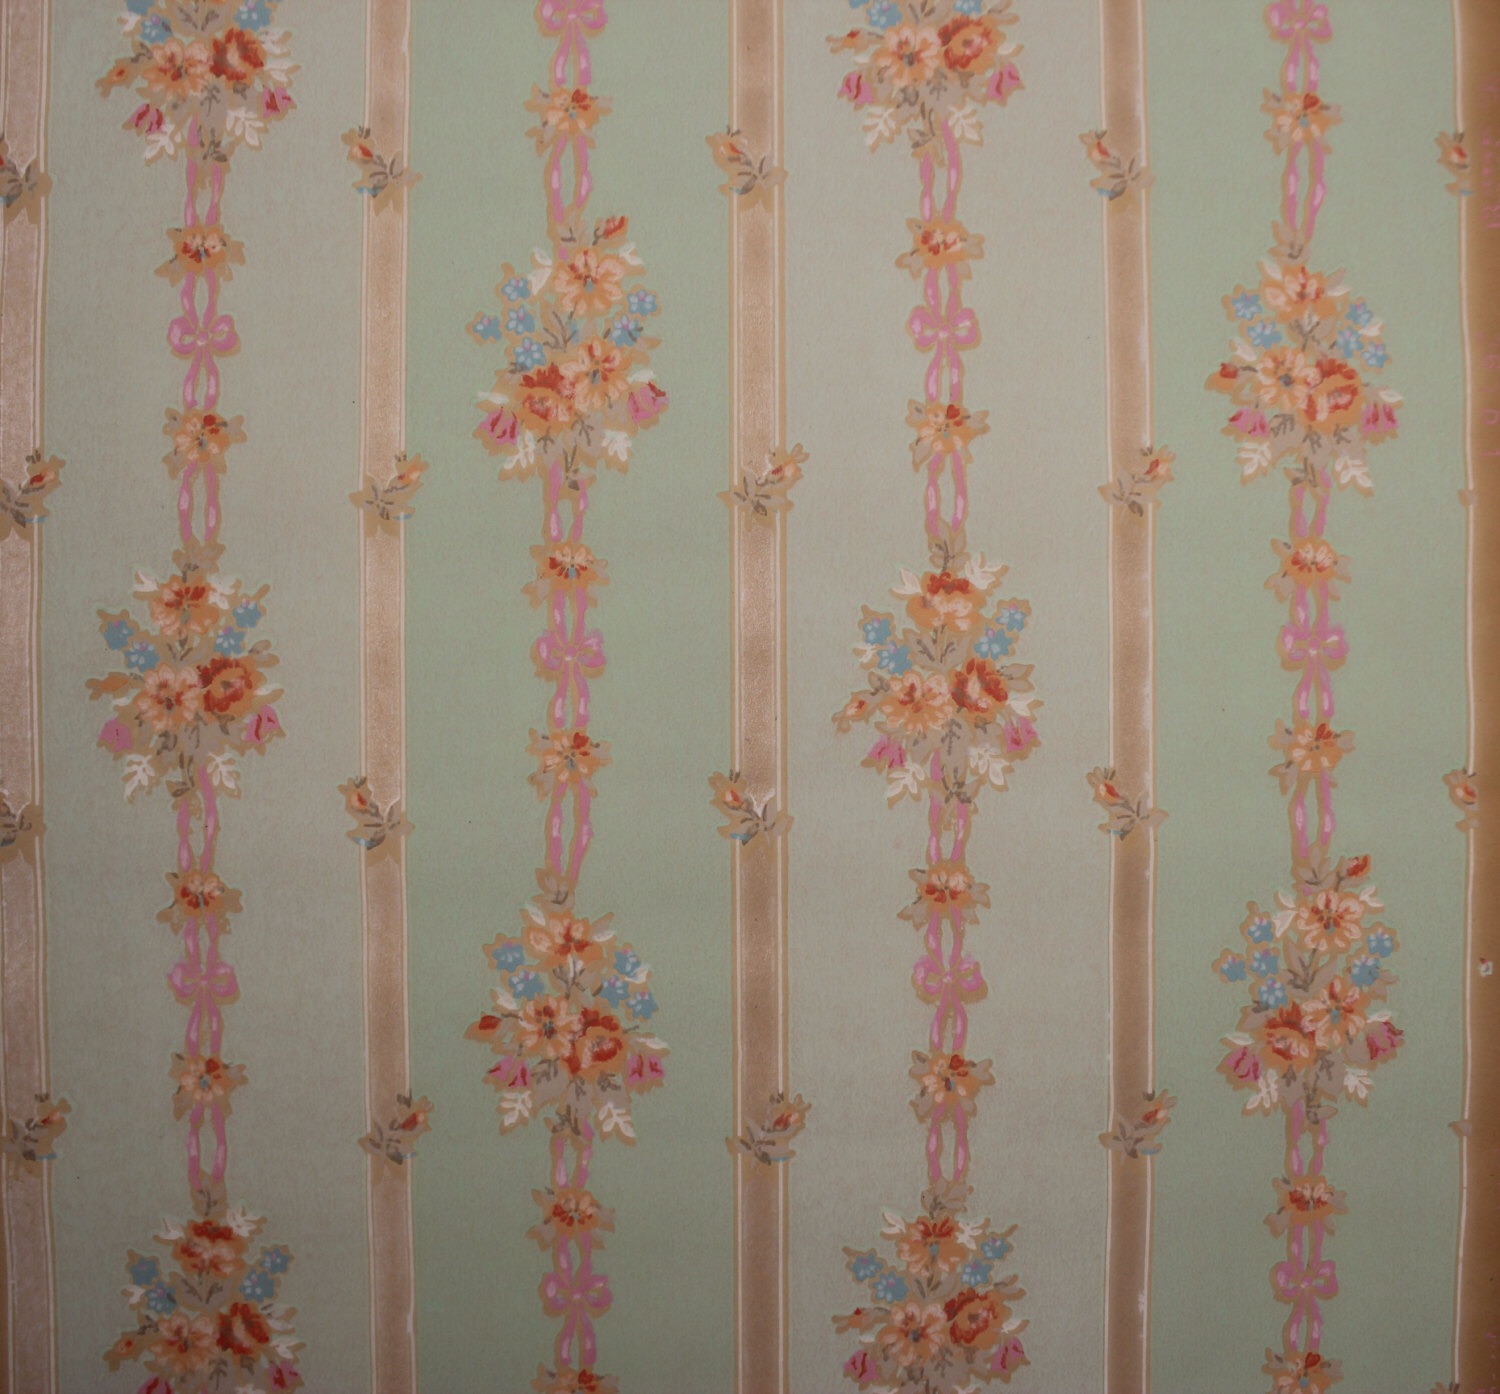 A Pretty 1920s Wallpaper - Floral Design - HD Wallpaper 